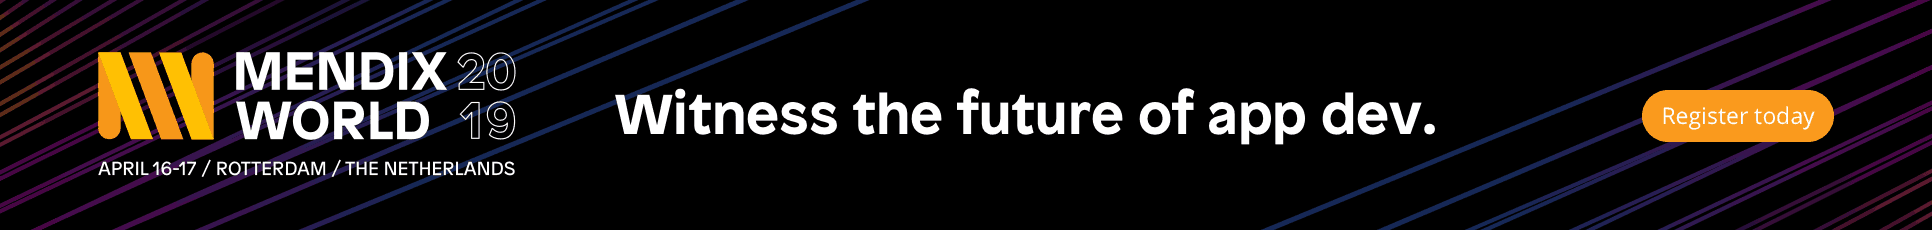 Mendix World 2019 - Witness the Future of App Development - Register Today